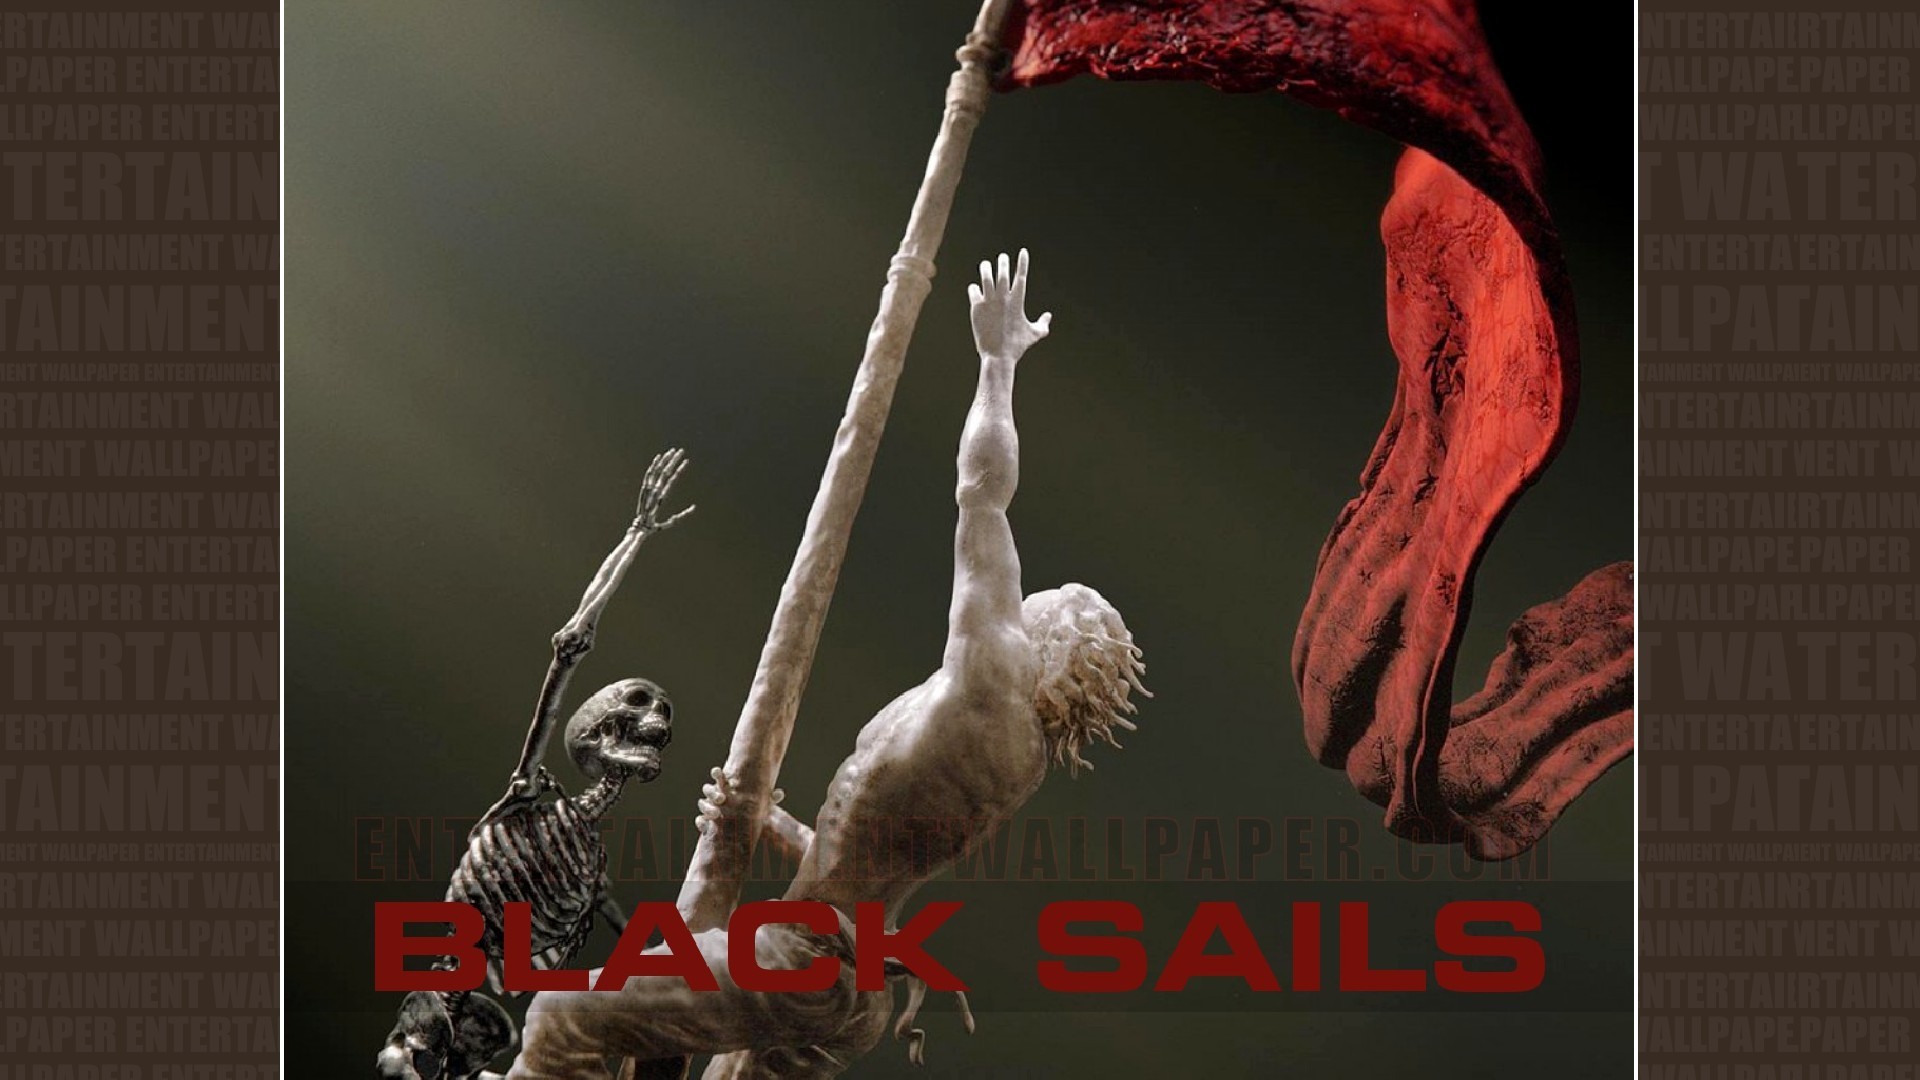 Black Sails Wallpaper – Original size, download now.